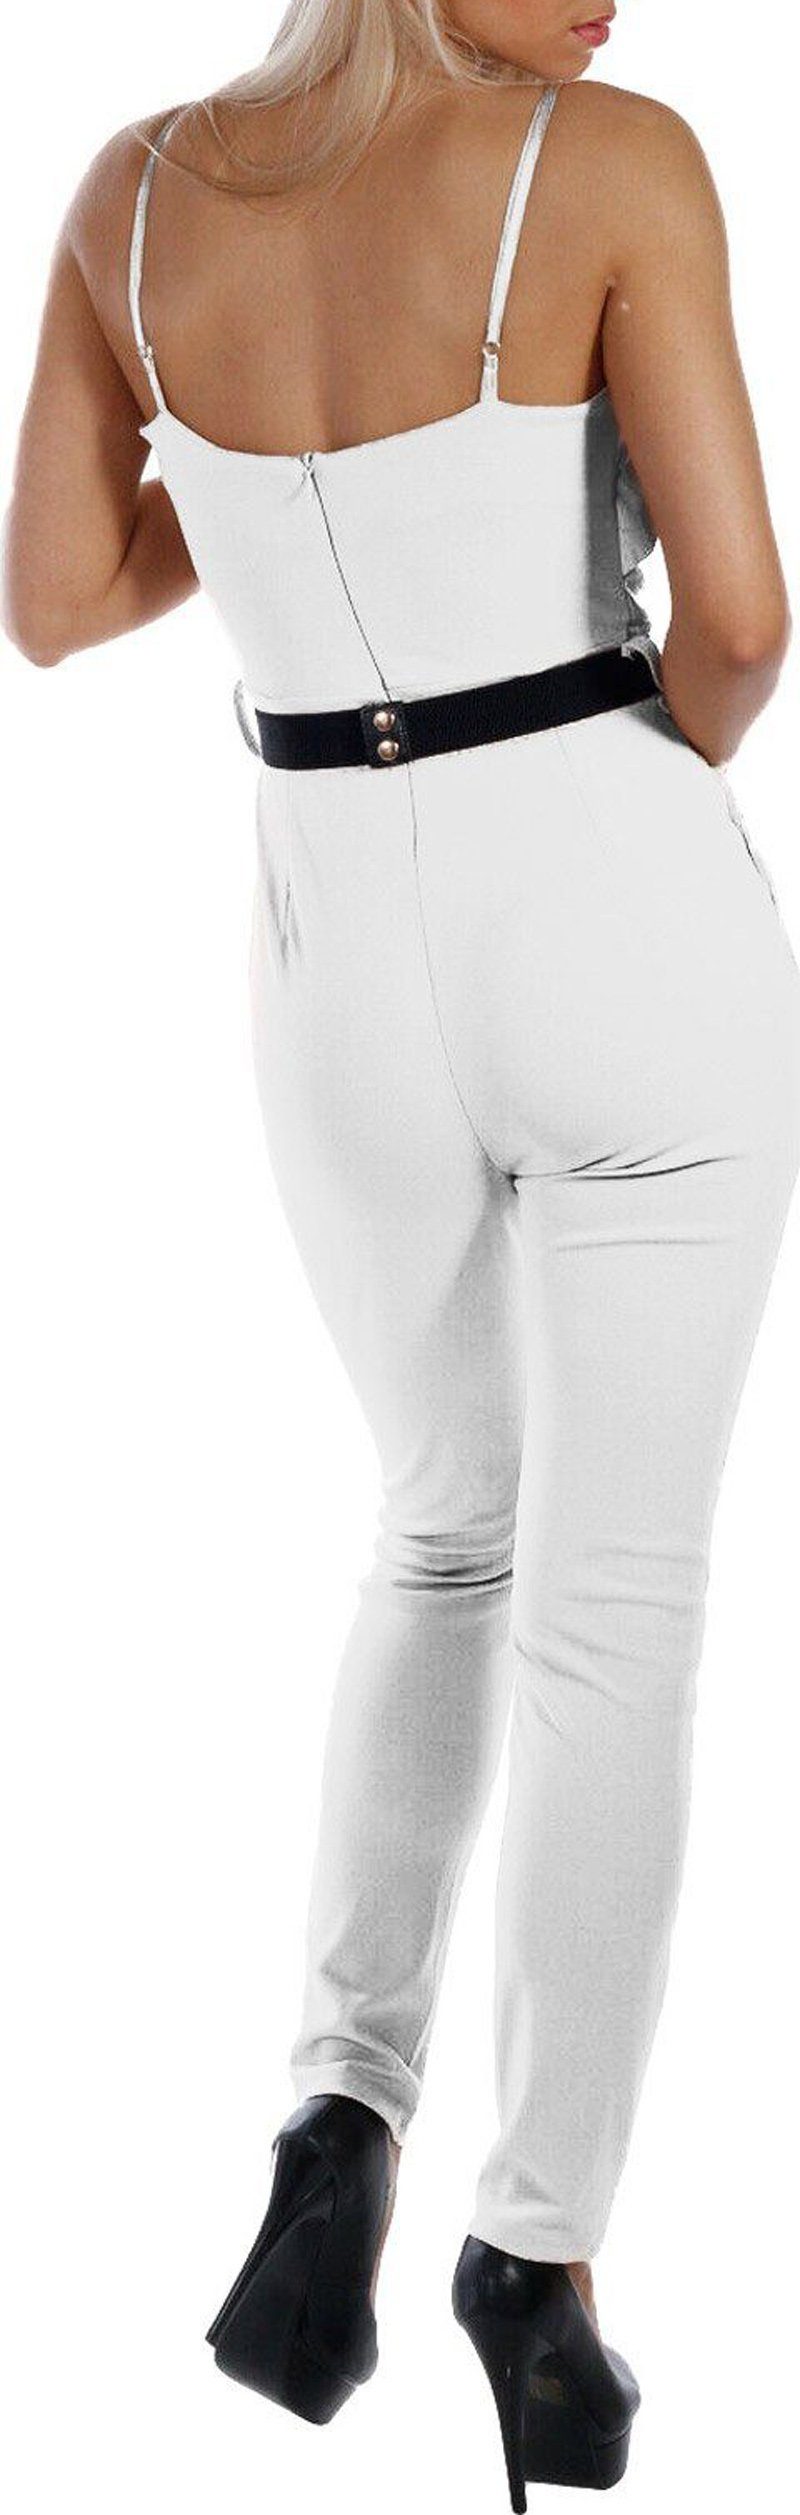 Charis Moda Jumpsuit Overall lang verstellbaren unifarben Spaghettiträgern Weiß mit